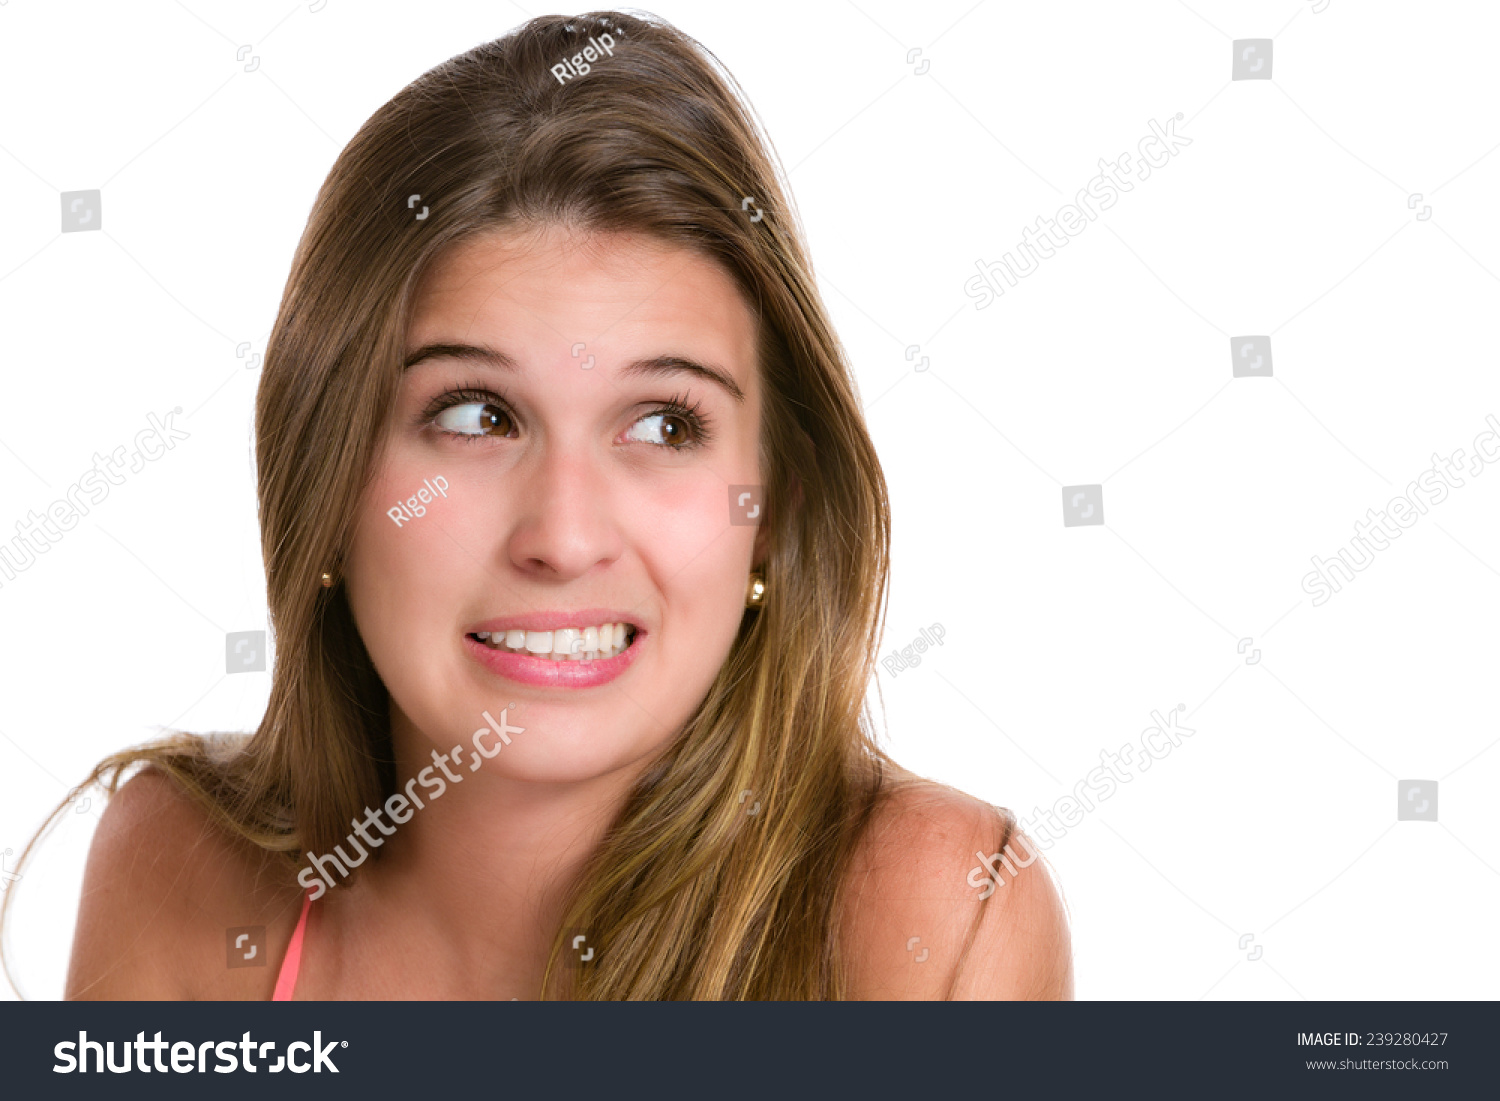 Ashamed Embarrassed Hispanic Young Woman Image库存照片239280427 Shutterstock